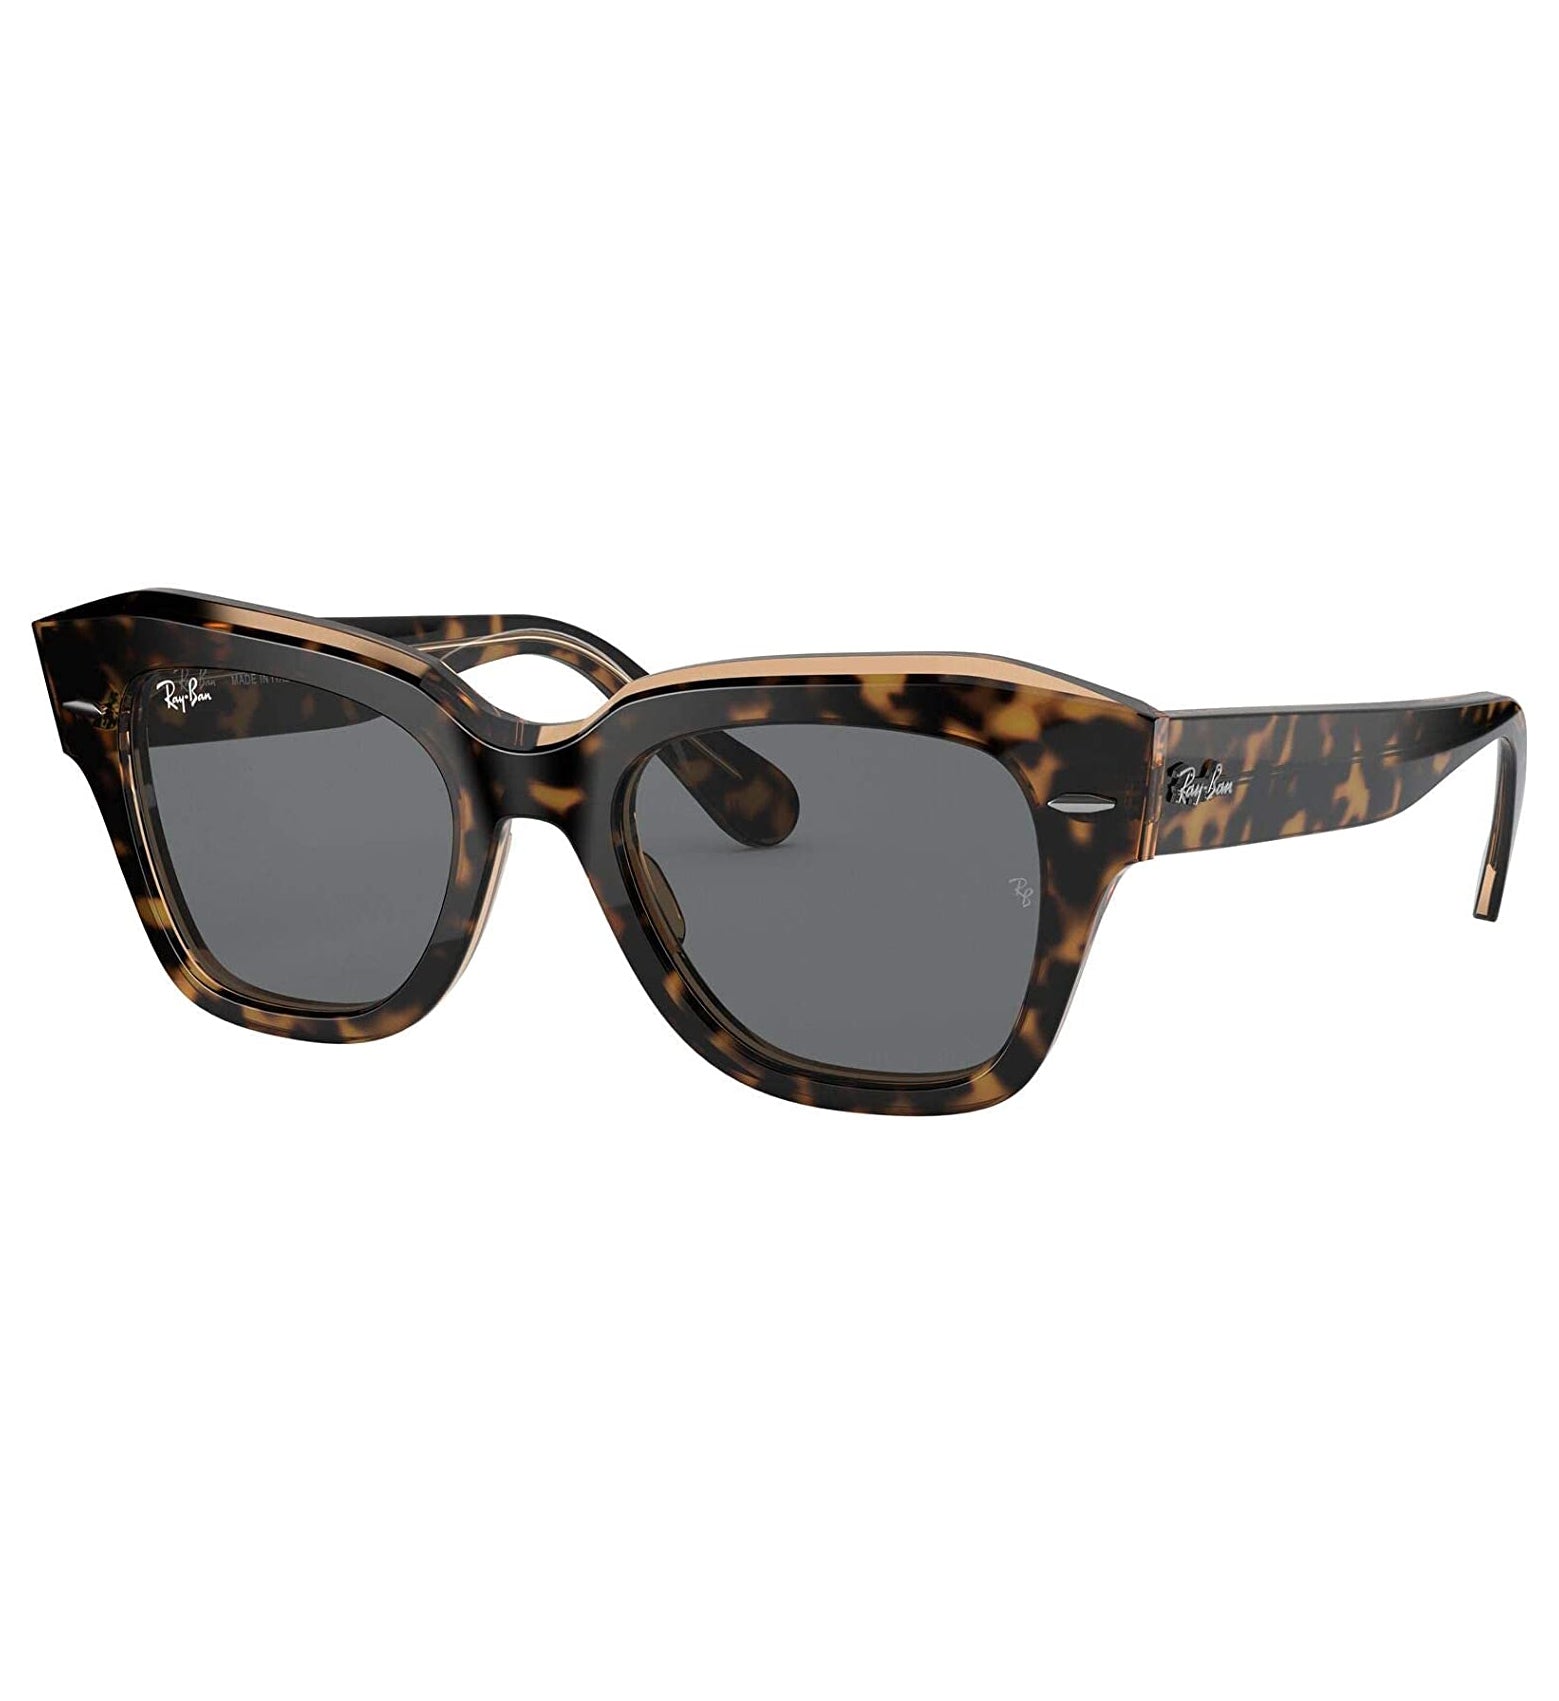 Ray Ban State Street Sunglasses BrownTortoise DarkGrey Oversized